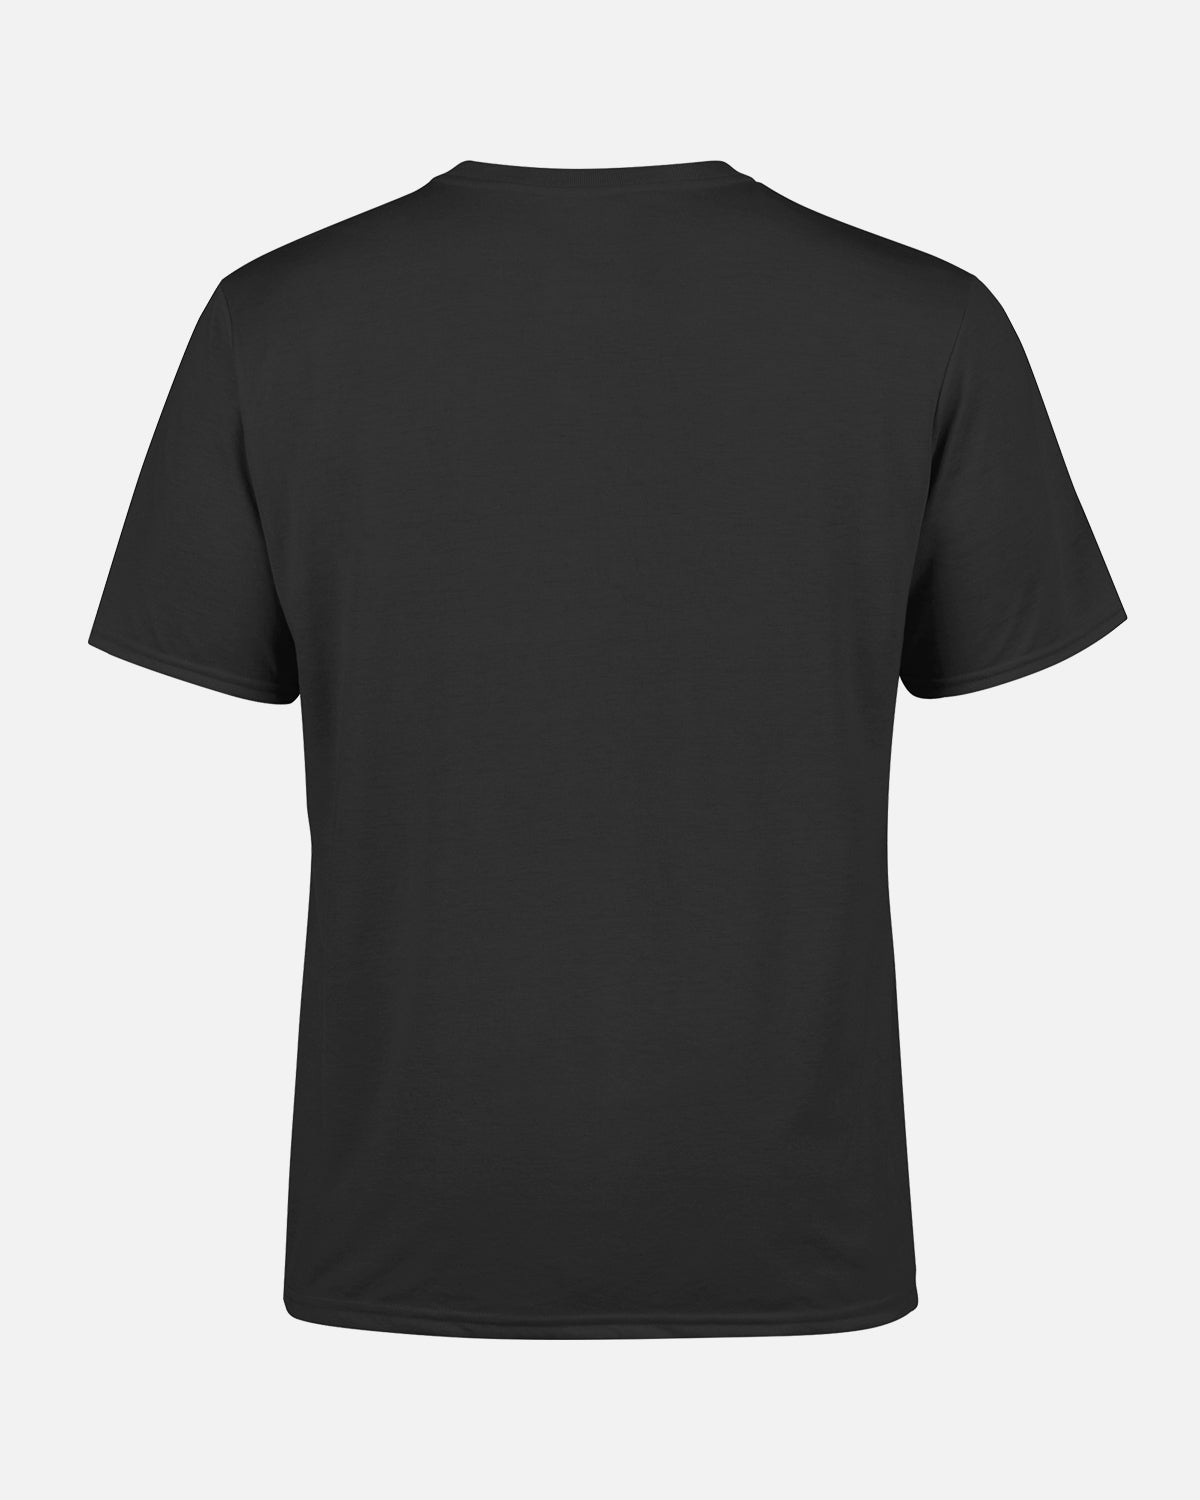 NFFC Junior Goal Print T-Shirt